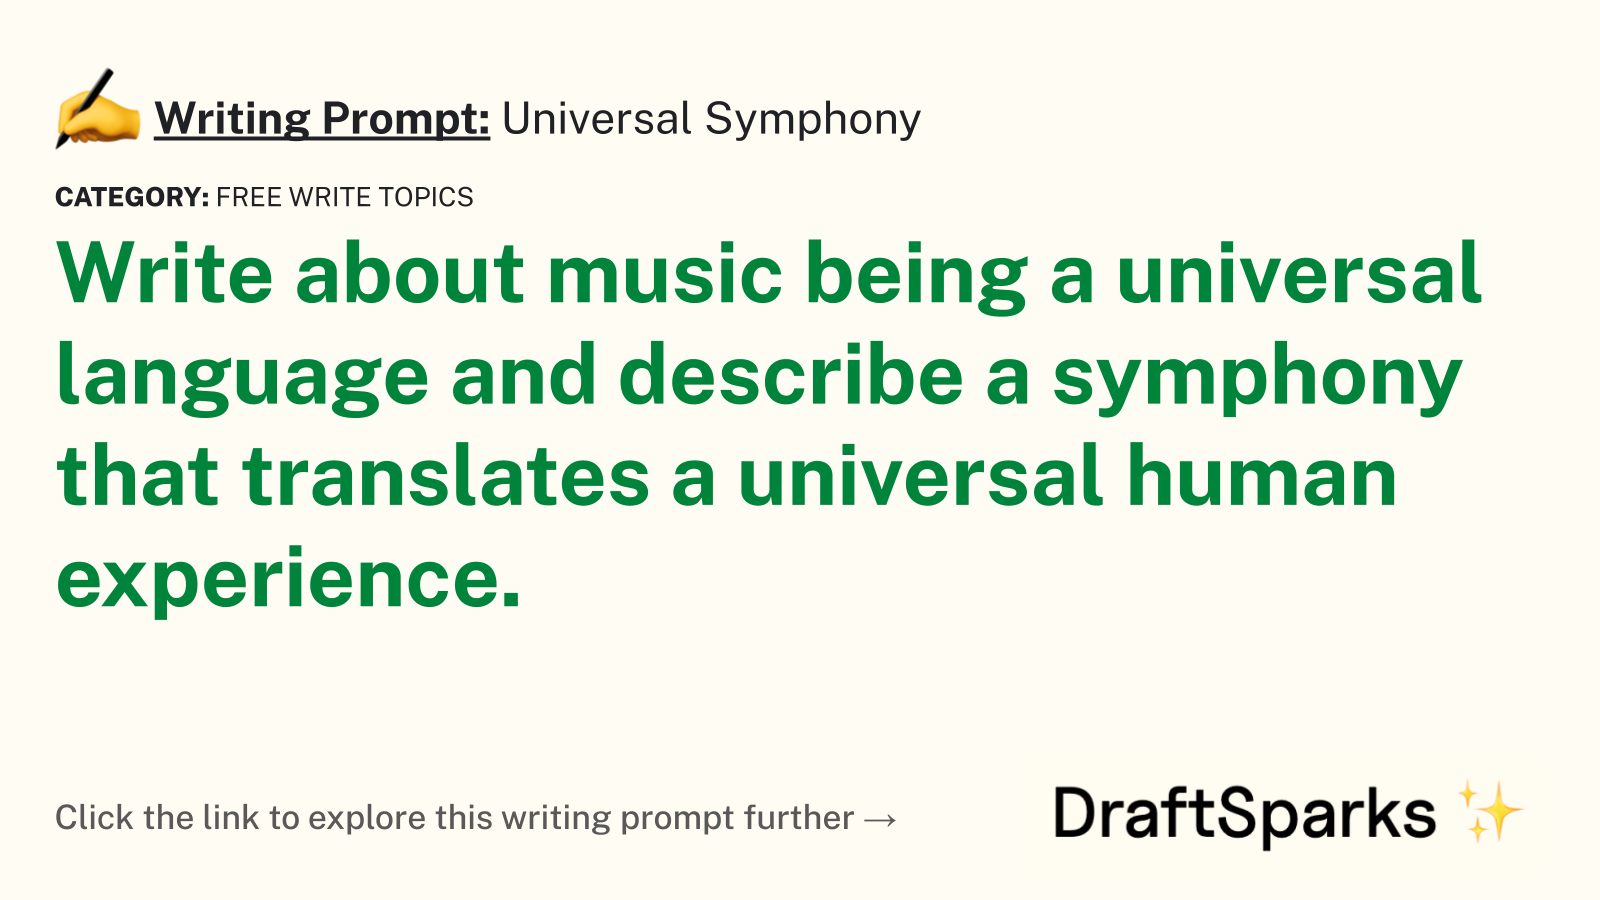 Universal Symphony